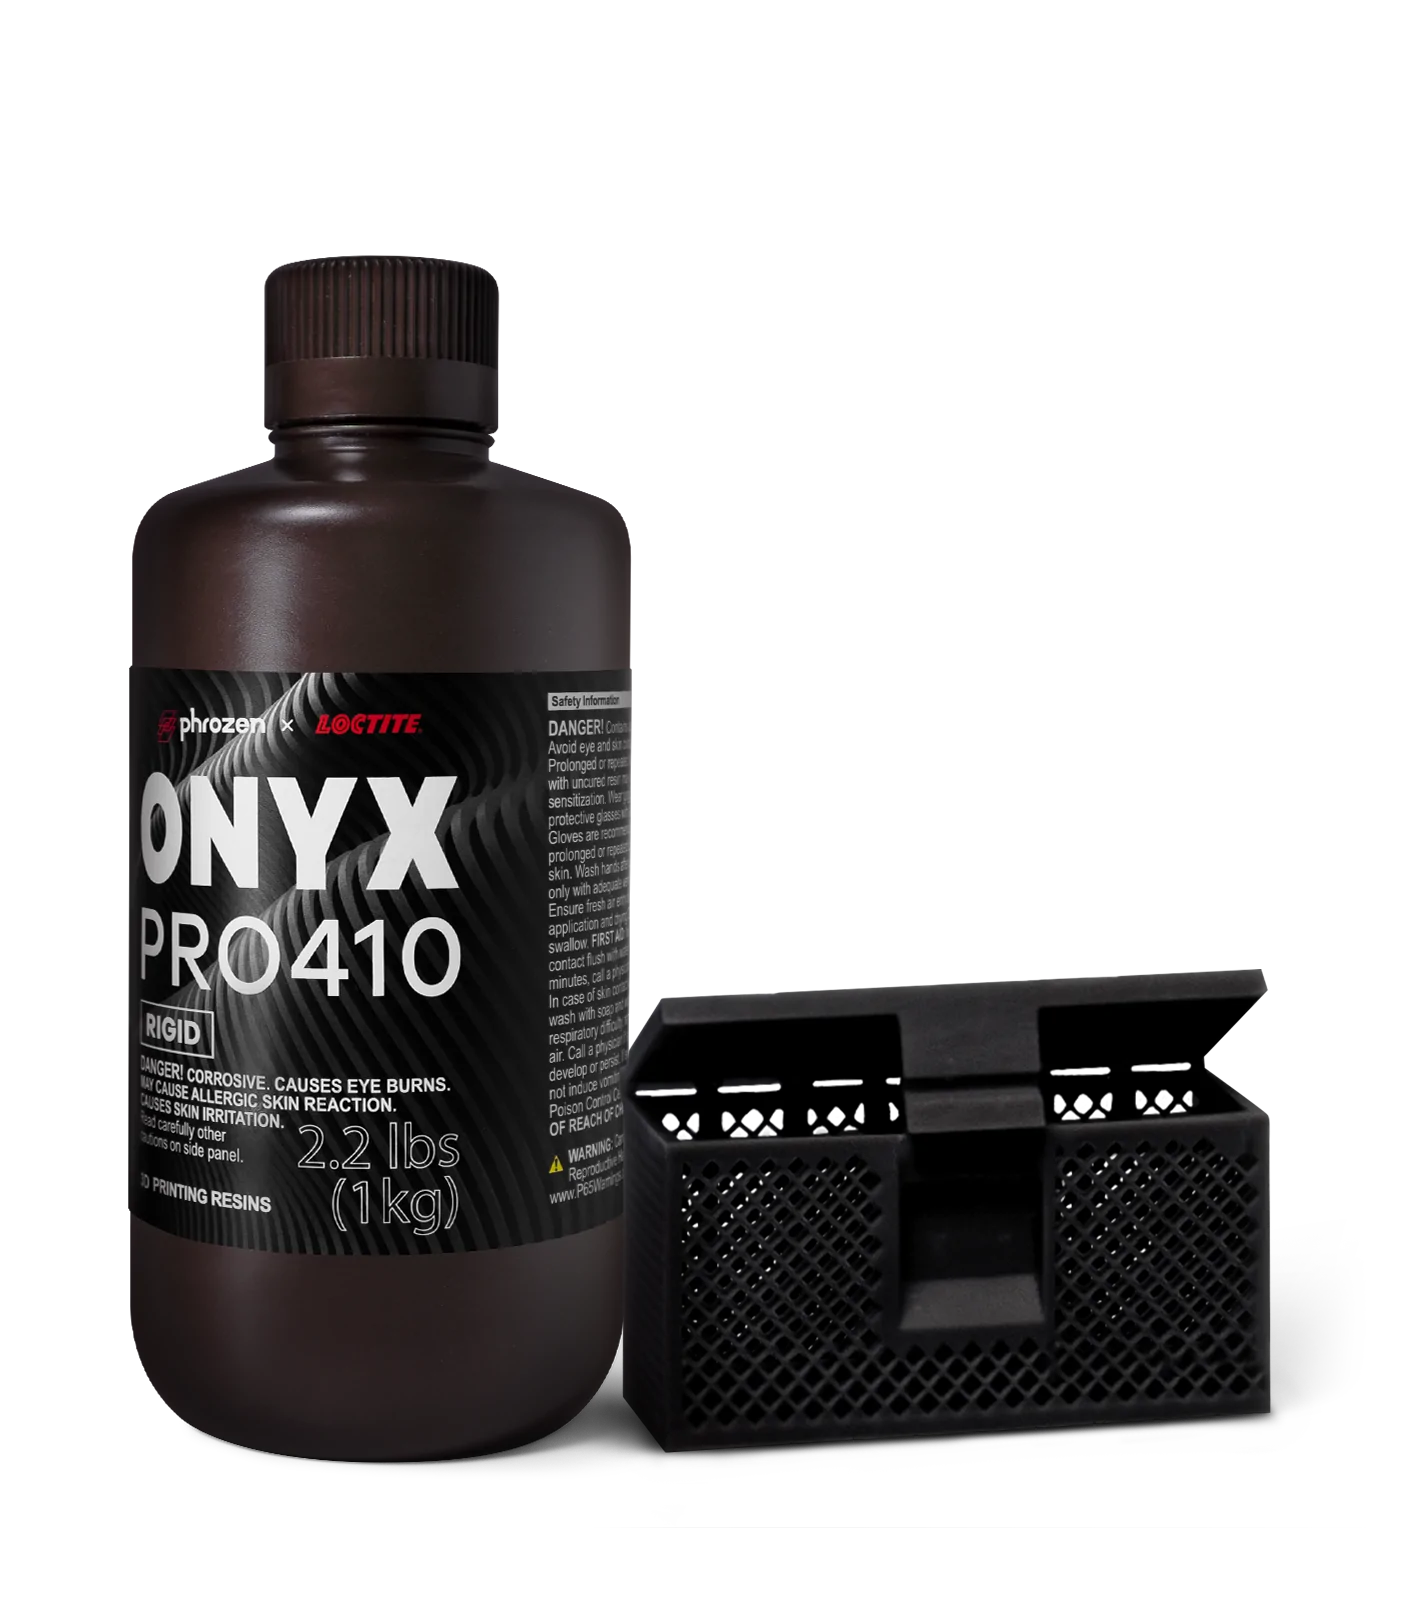 Phrozen Onyx Rigid Pro410 1000g